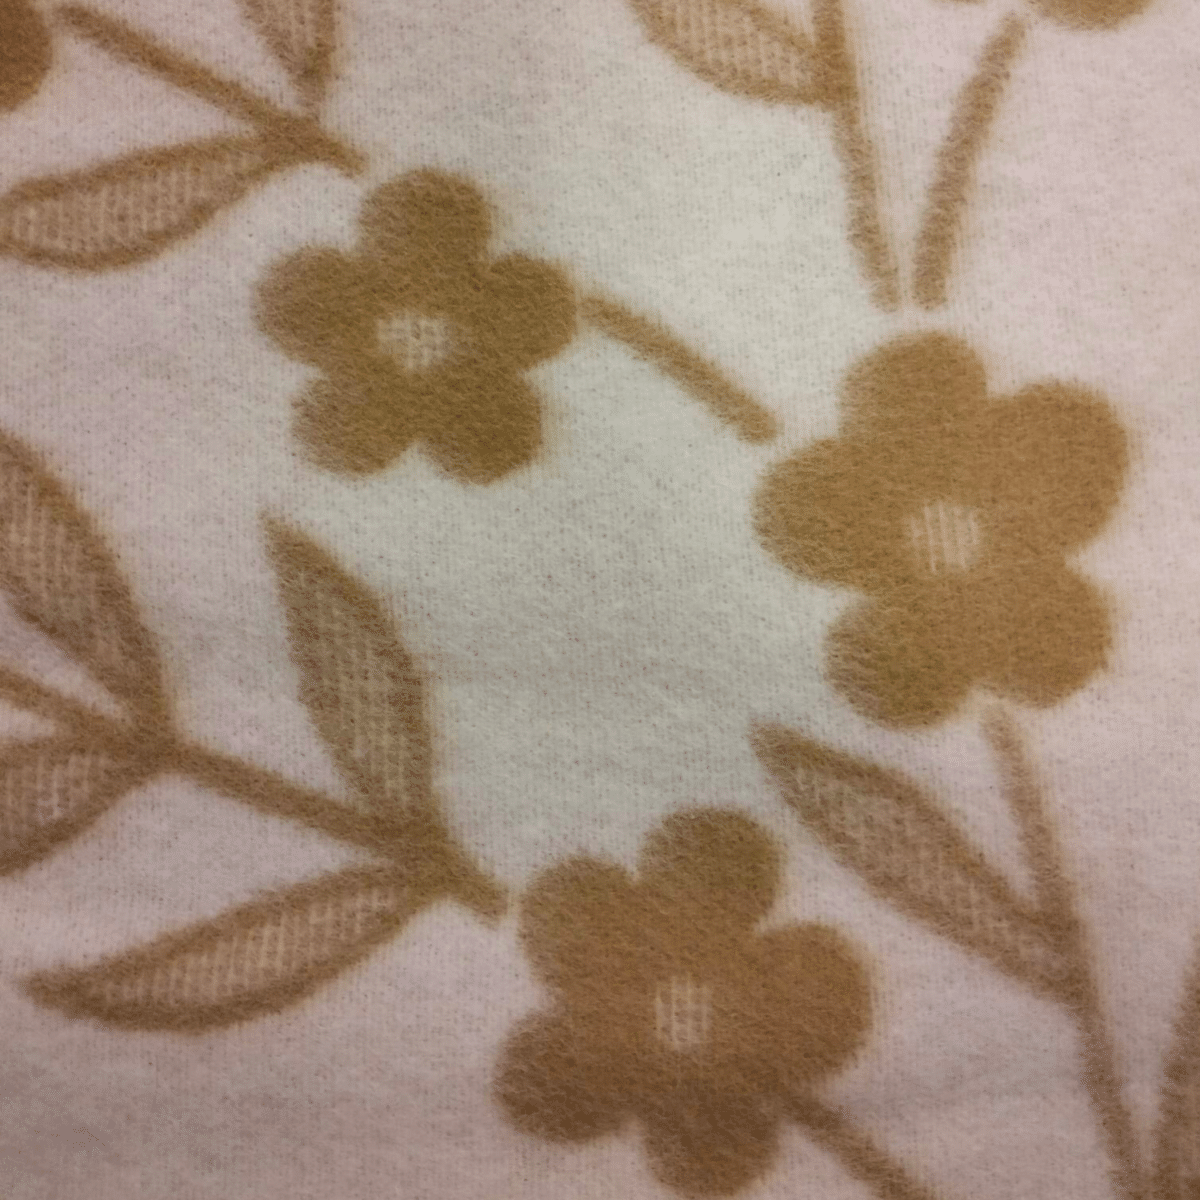 coperta-regale-pura-lana-vergine-beige-made-in-italy-dettaglio-disegno-fiori